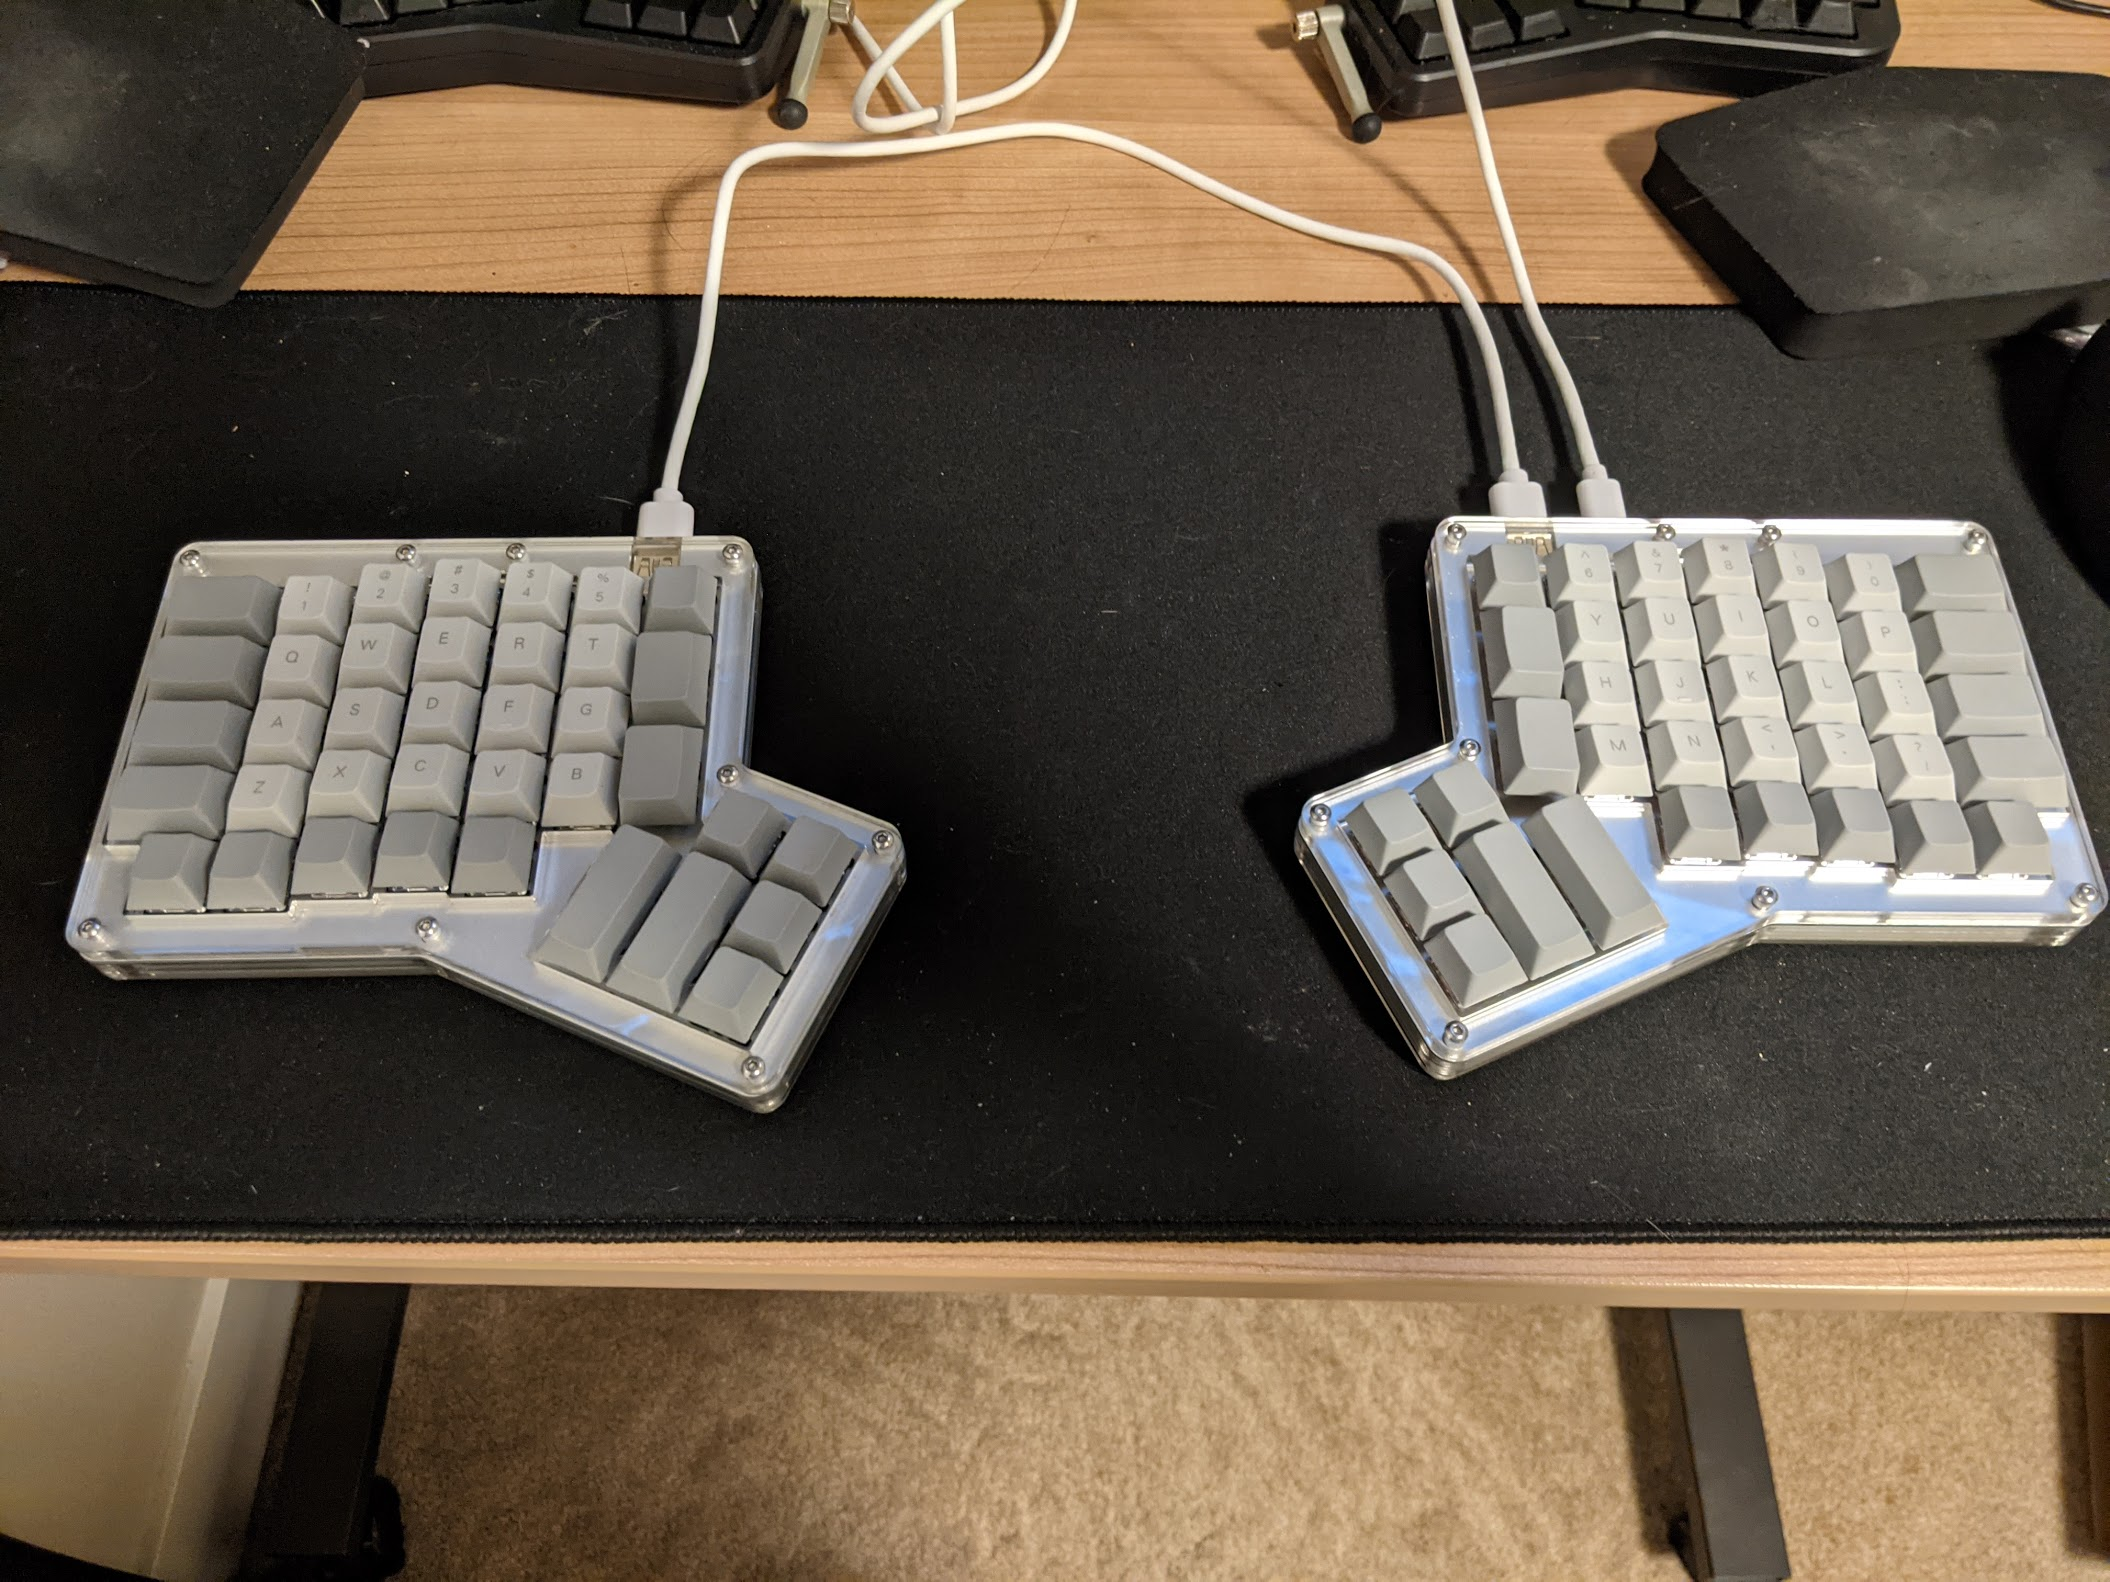 final keyboard build